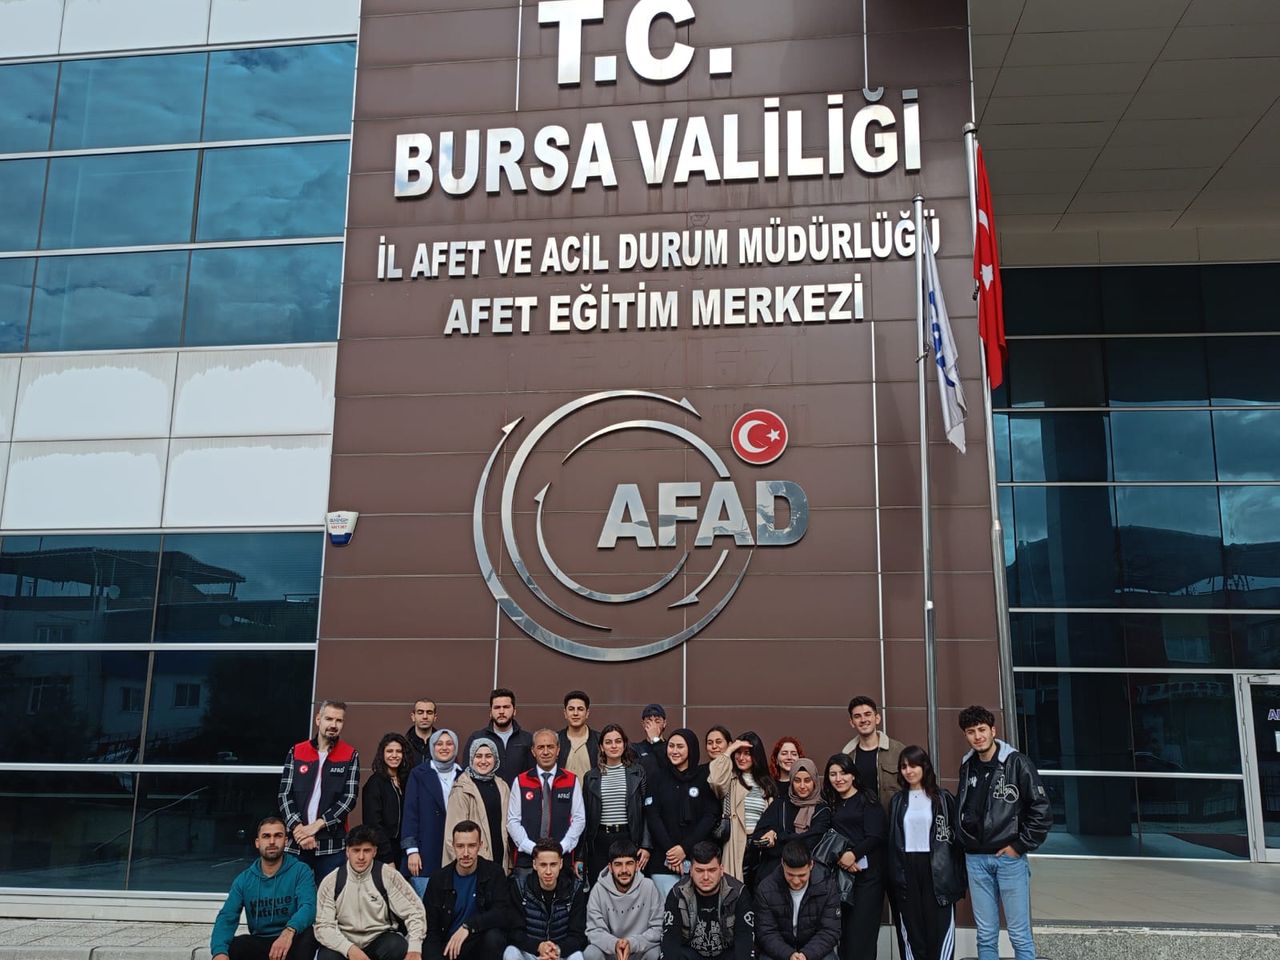 Bursa'da Öğrencilere Afet Bilinci Eğitimi